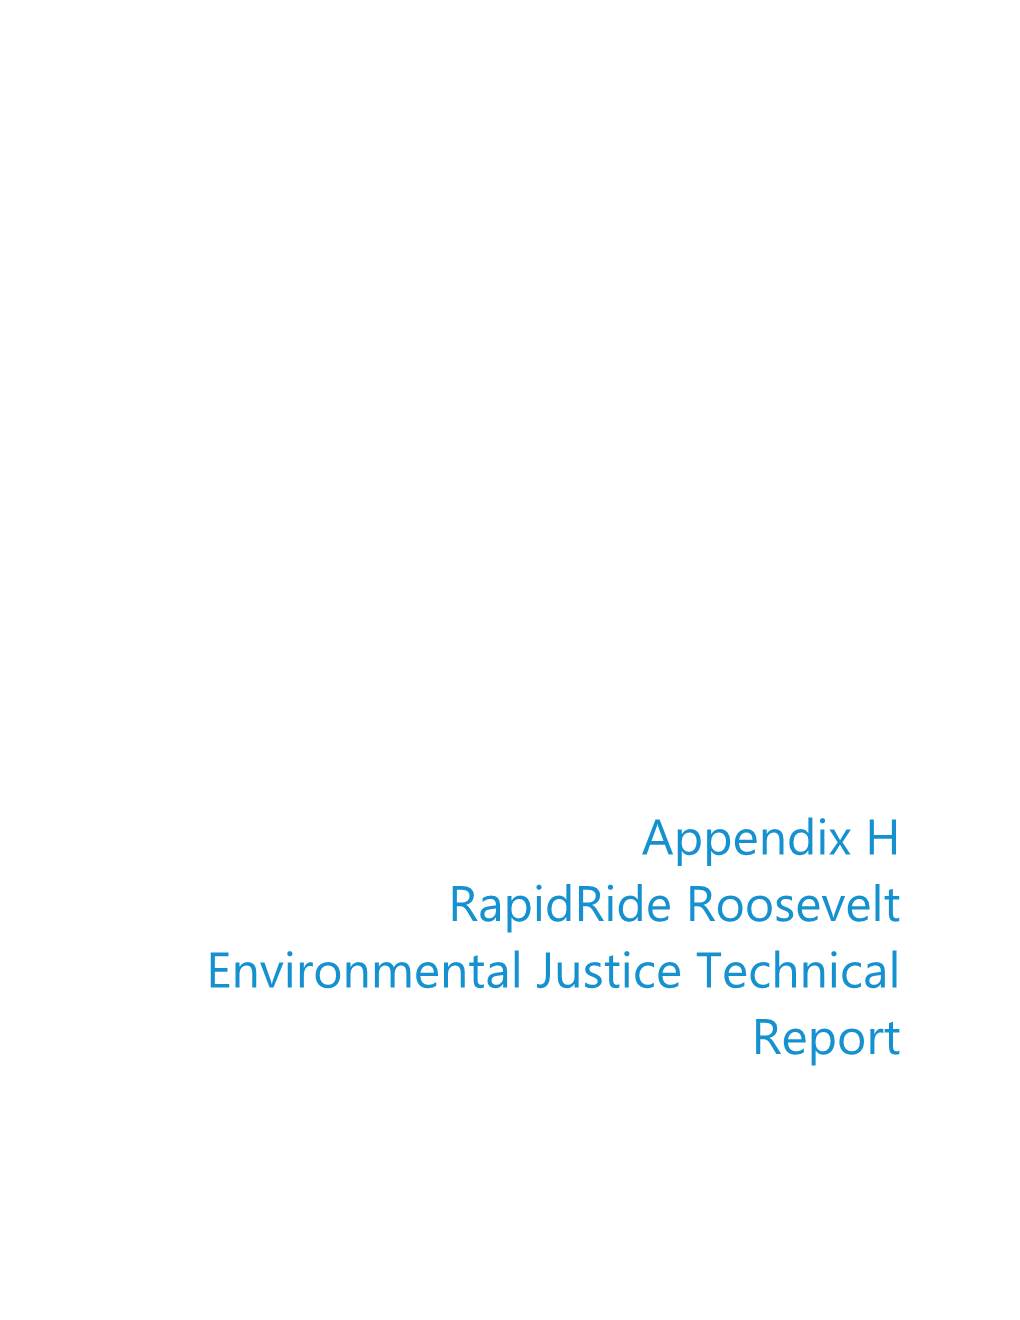 Appendix H Rapidride Roosevelt Environmental Justice Technical Report